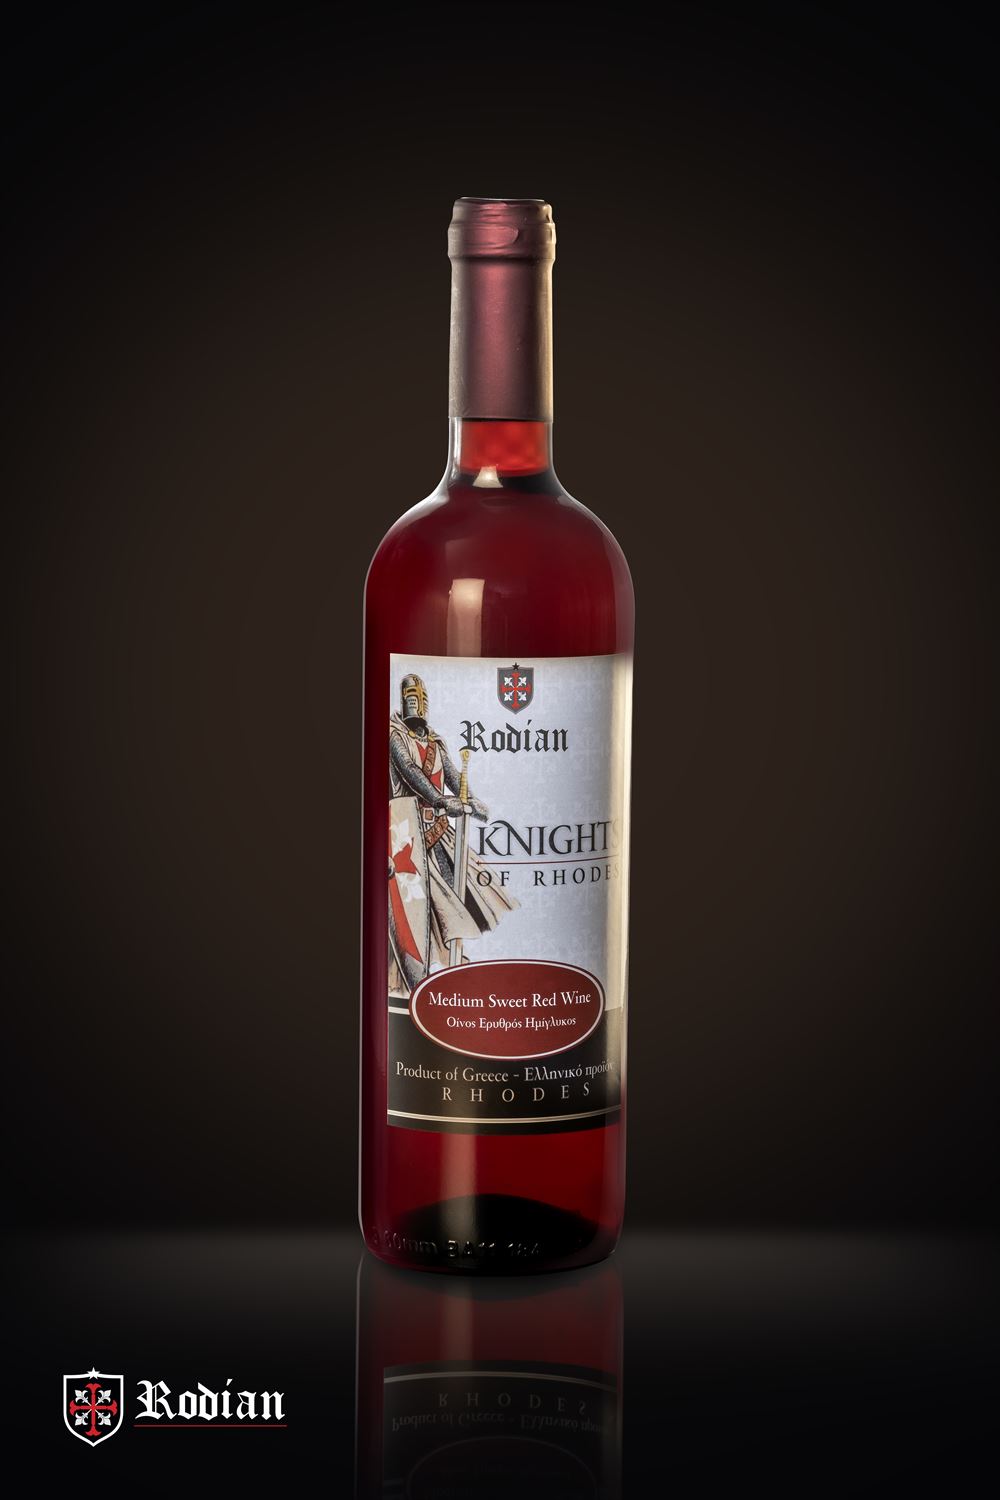 Medium Sweet Red Wine from Rhodes